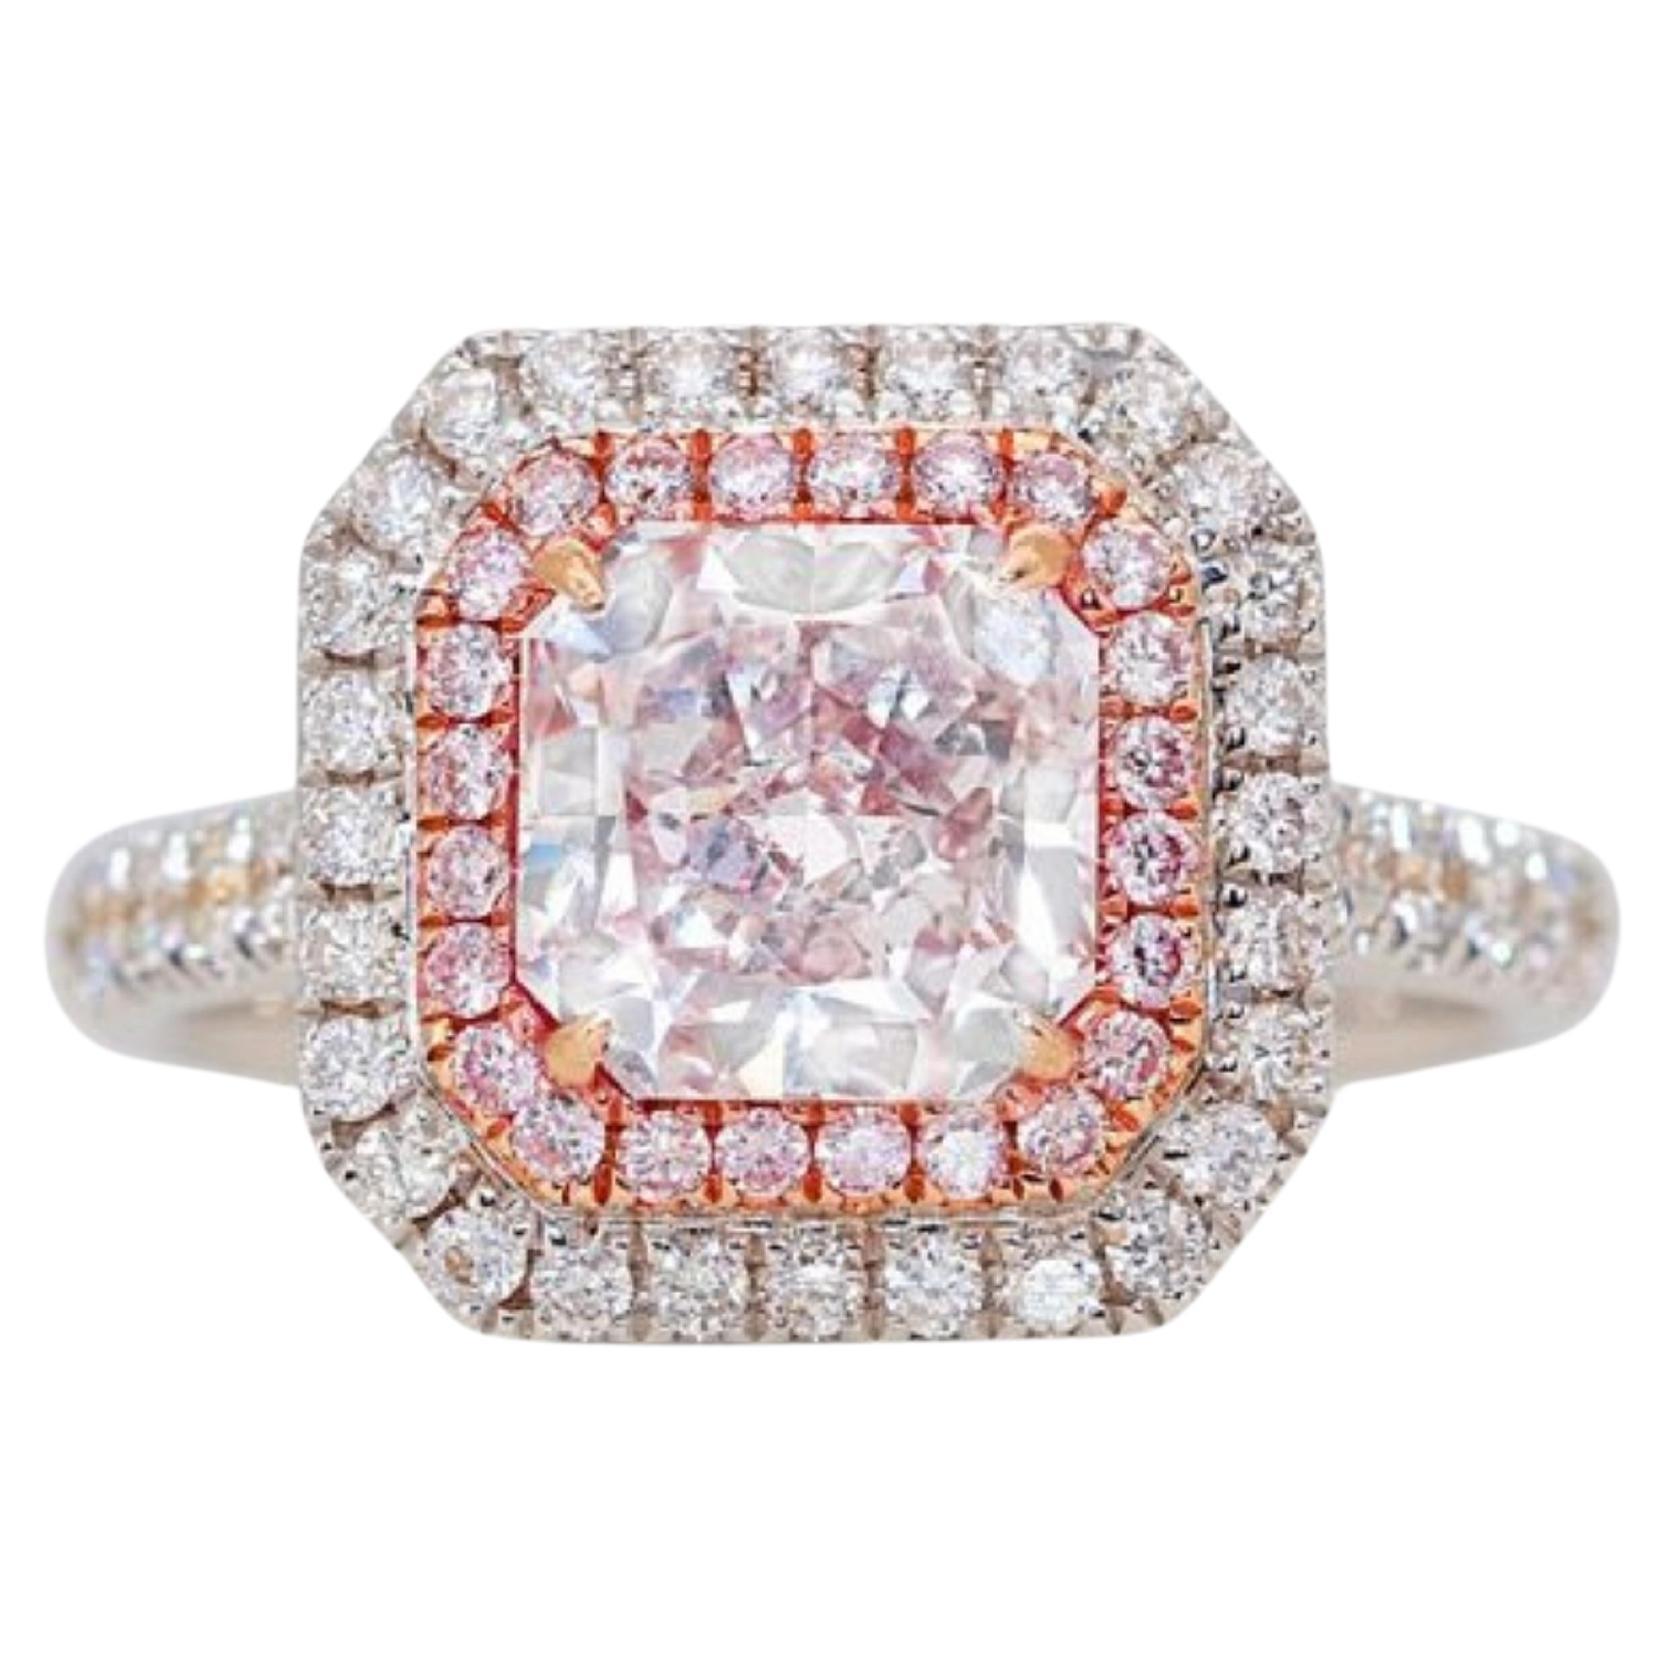 Captivating 18k White Gold Ring 1.86ct. Square Radiant Halo Diamond Ring